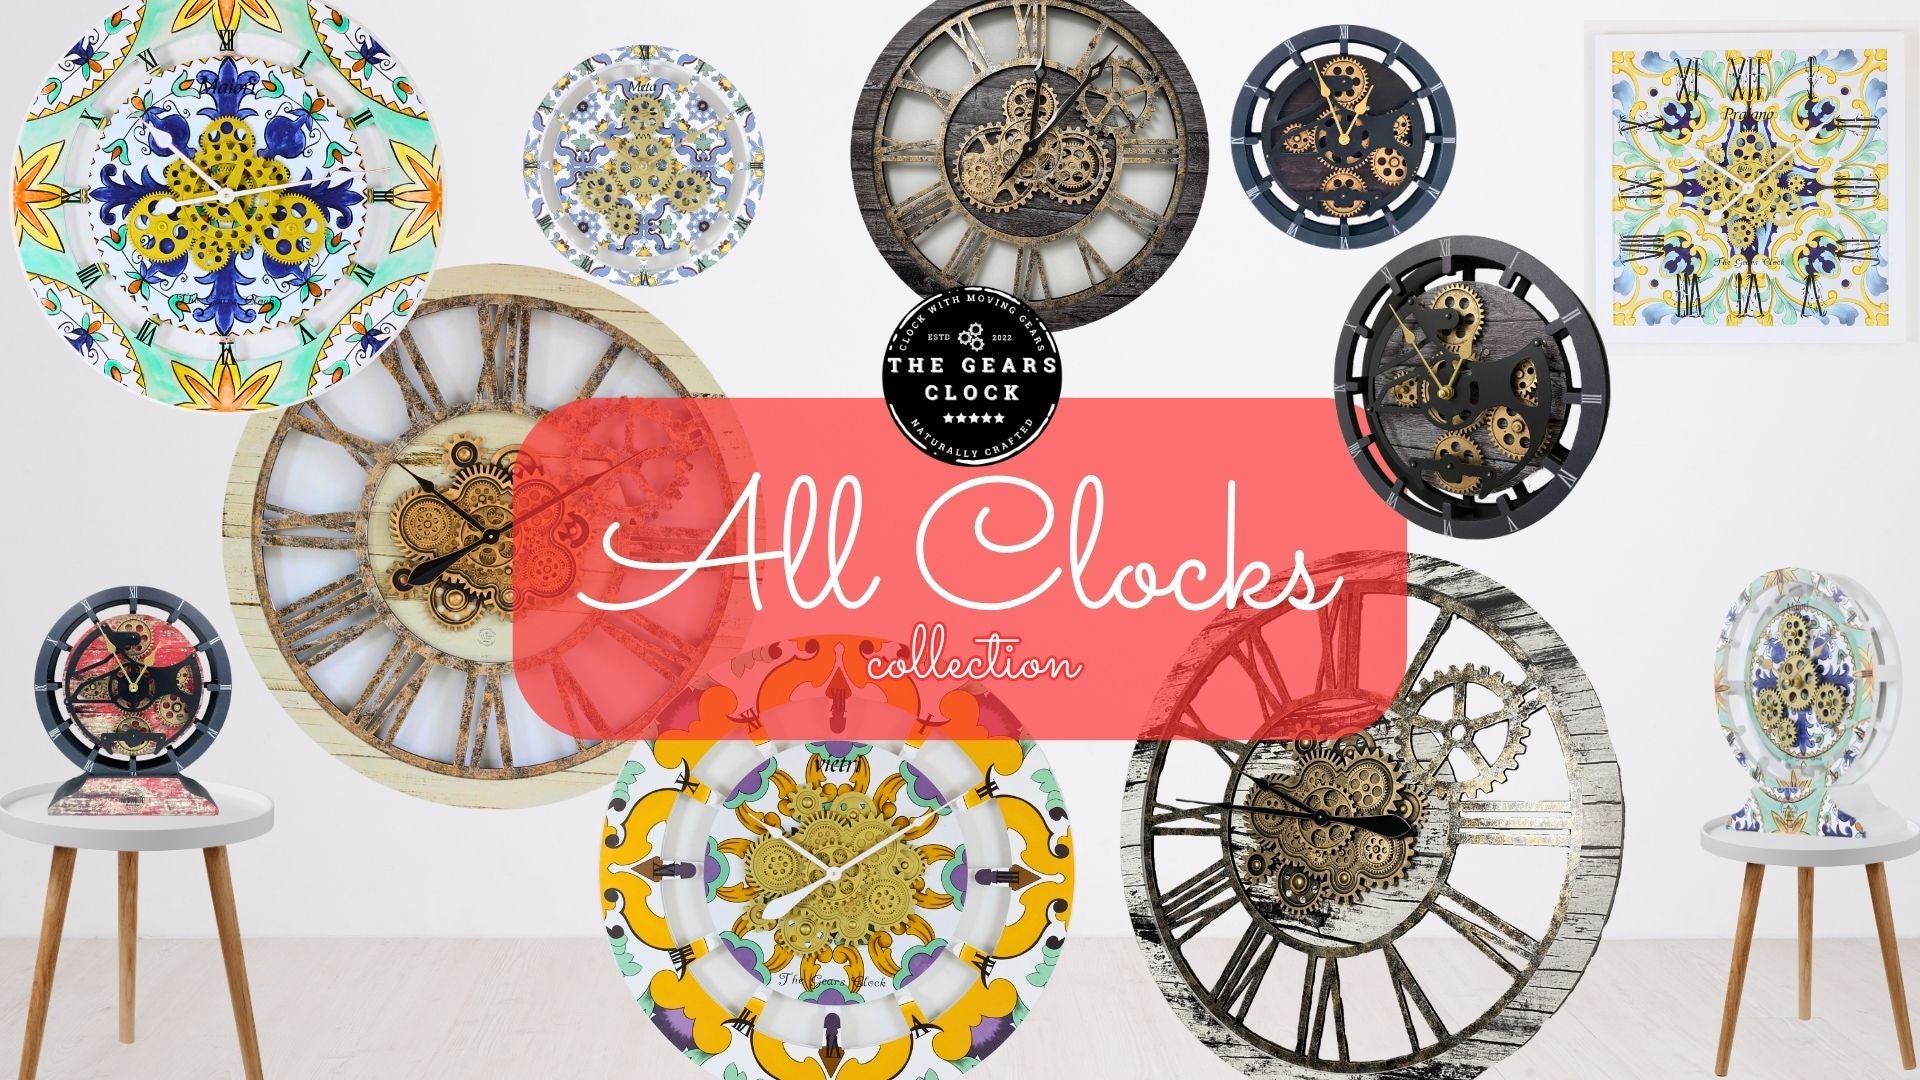 All Clocks